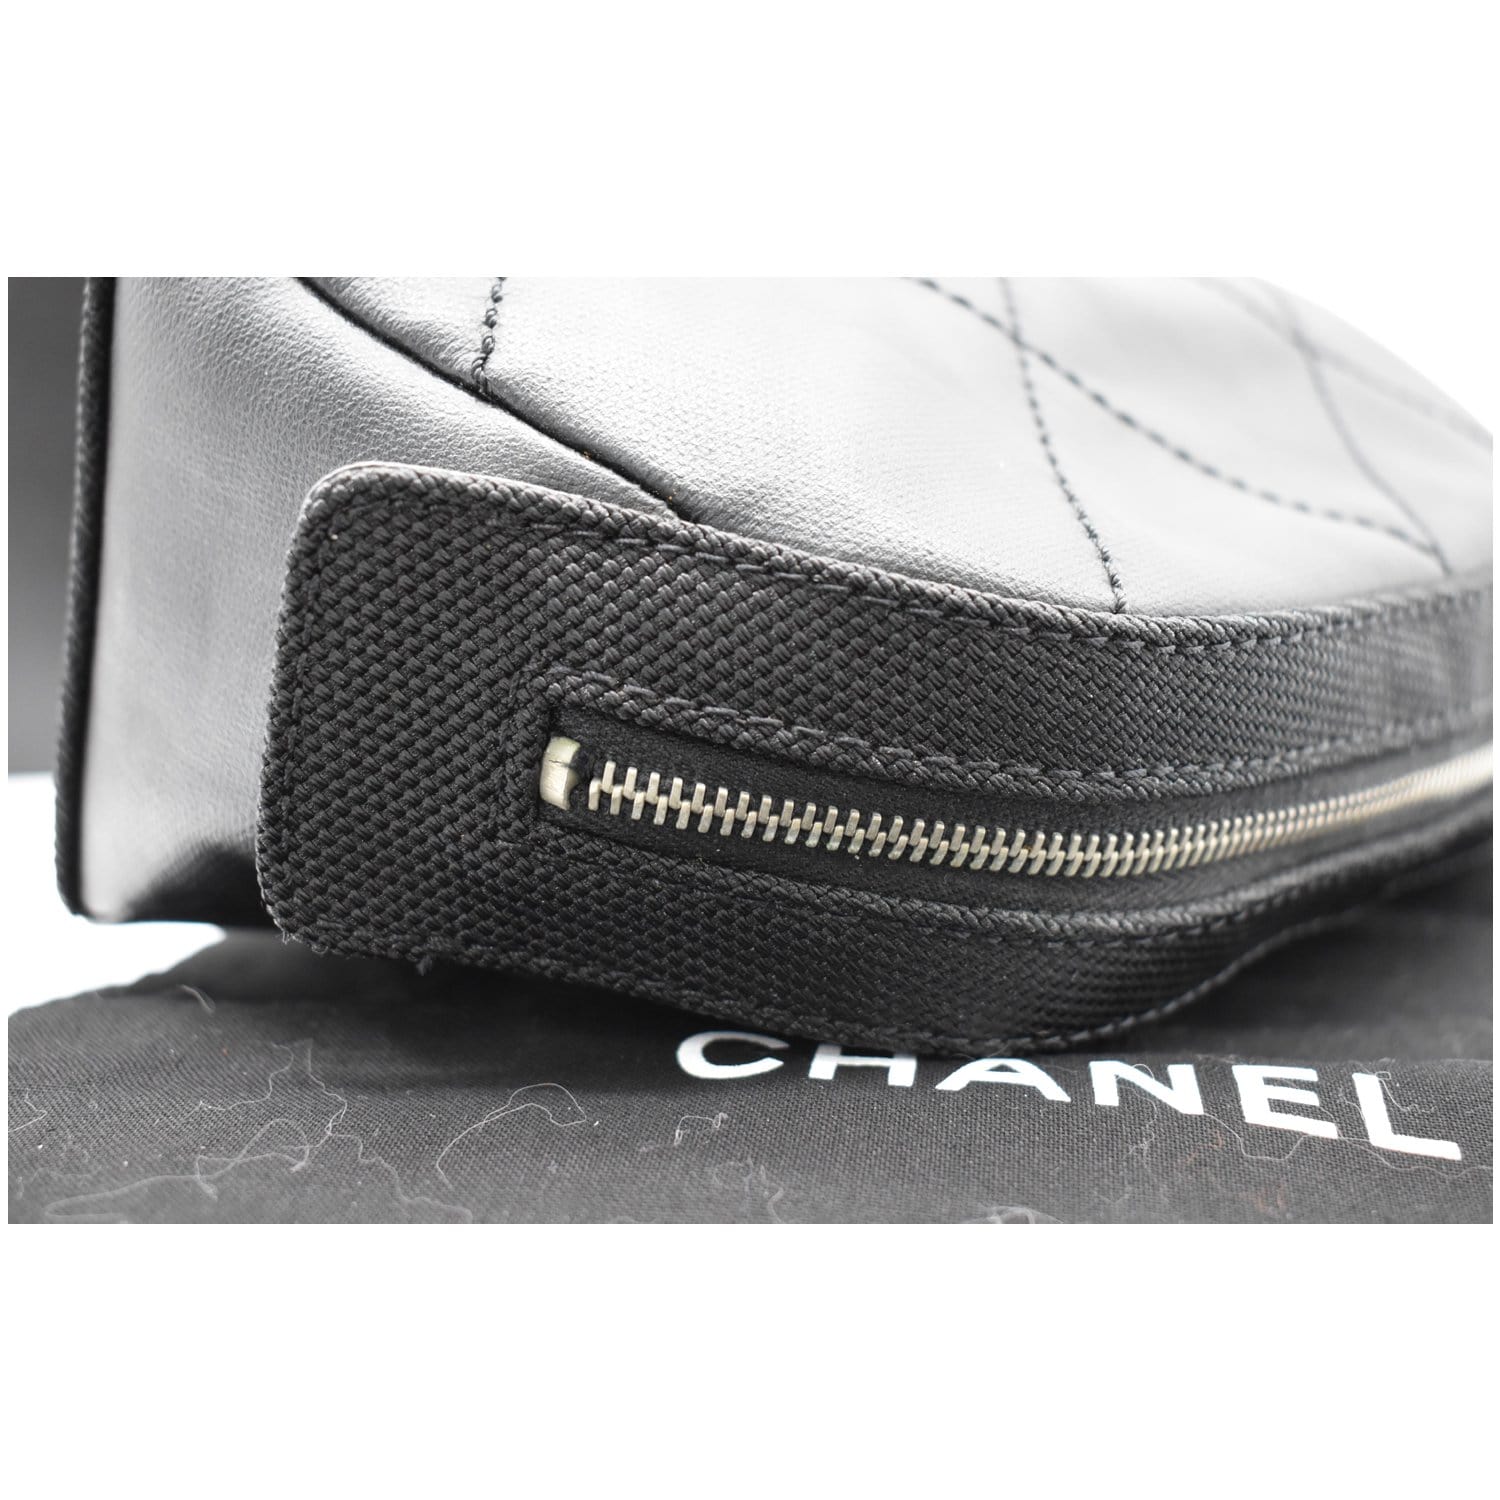 chanel cosmetic bag black